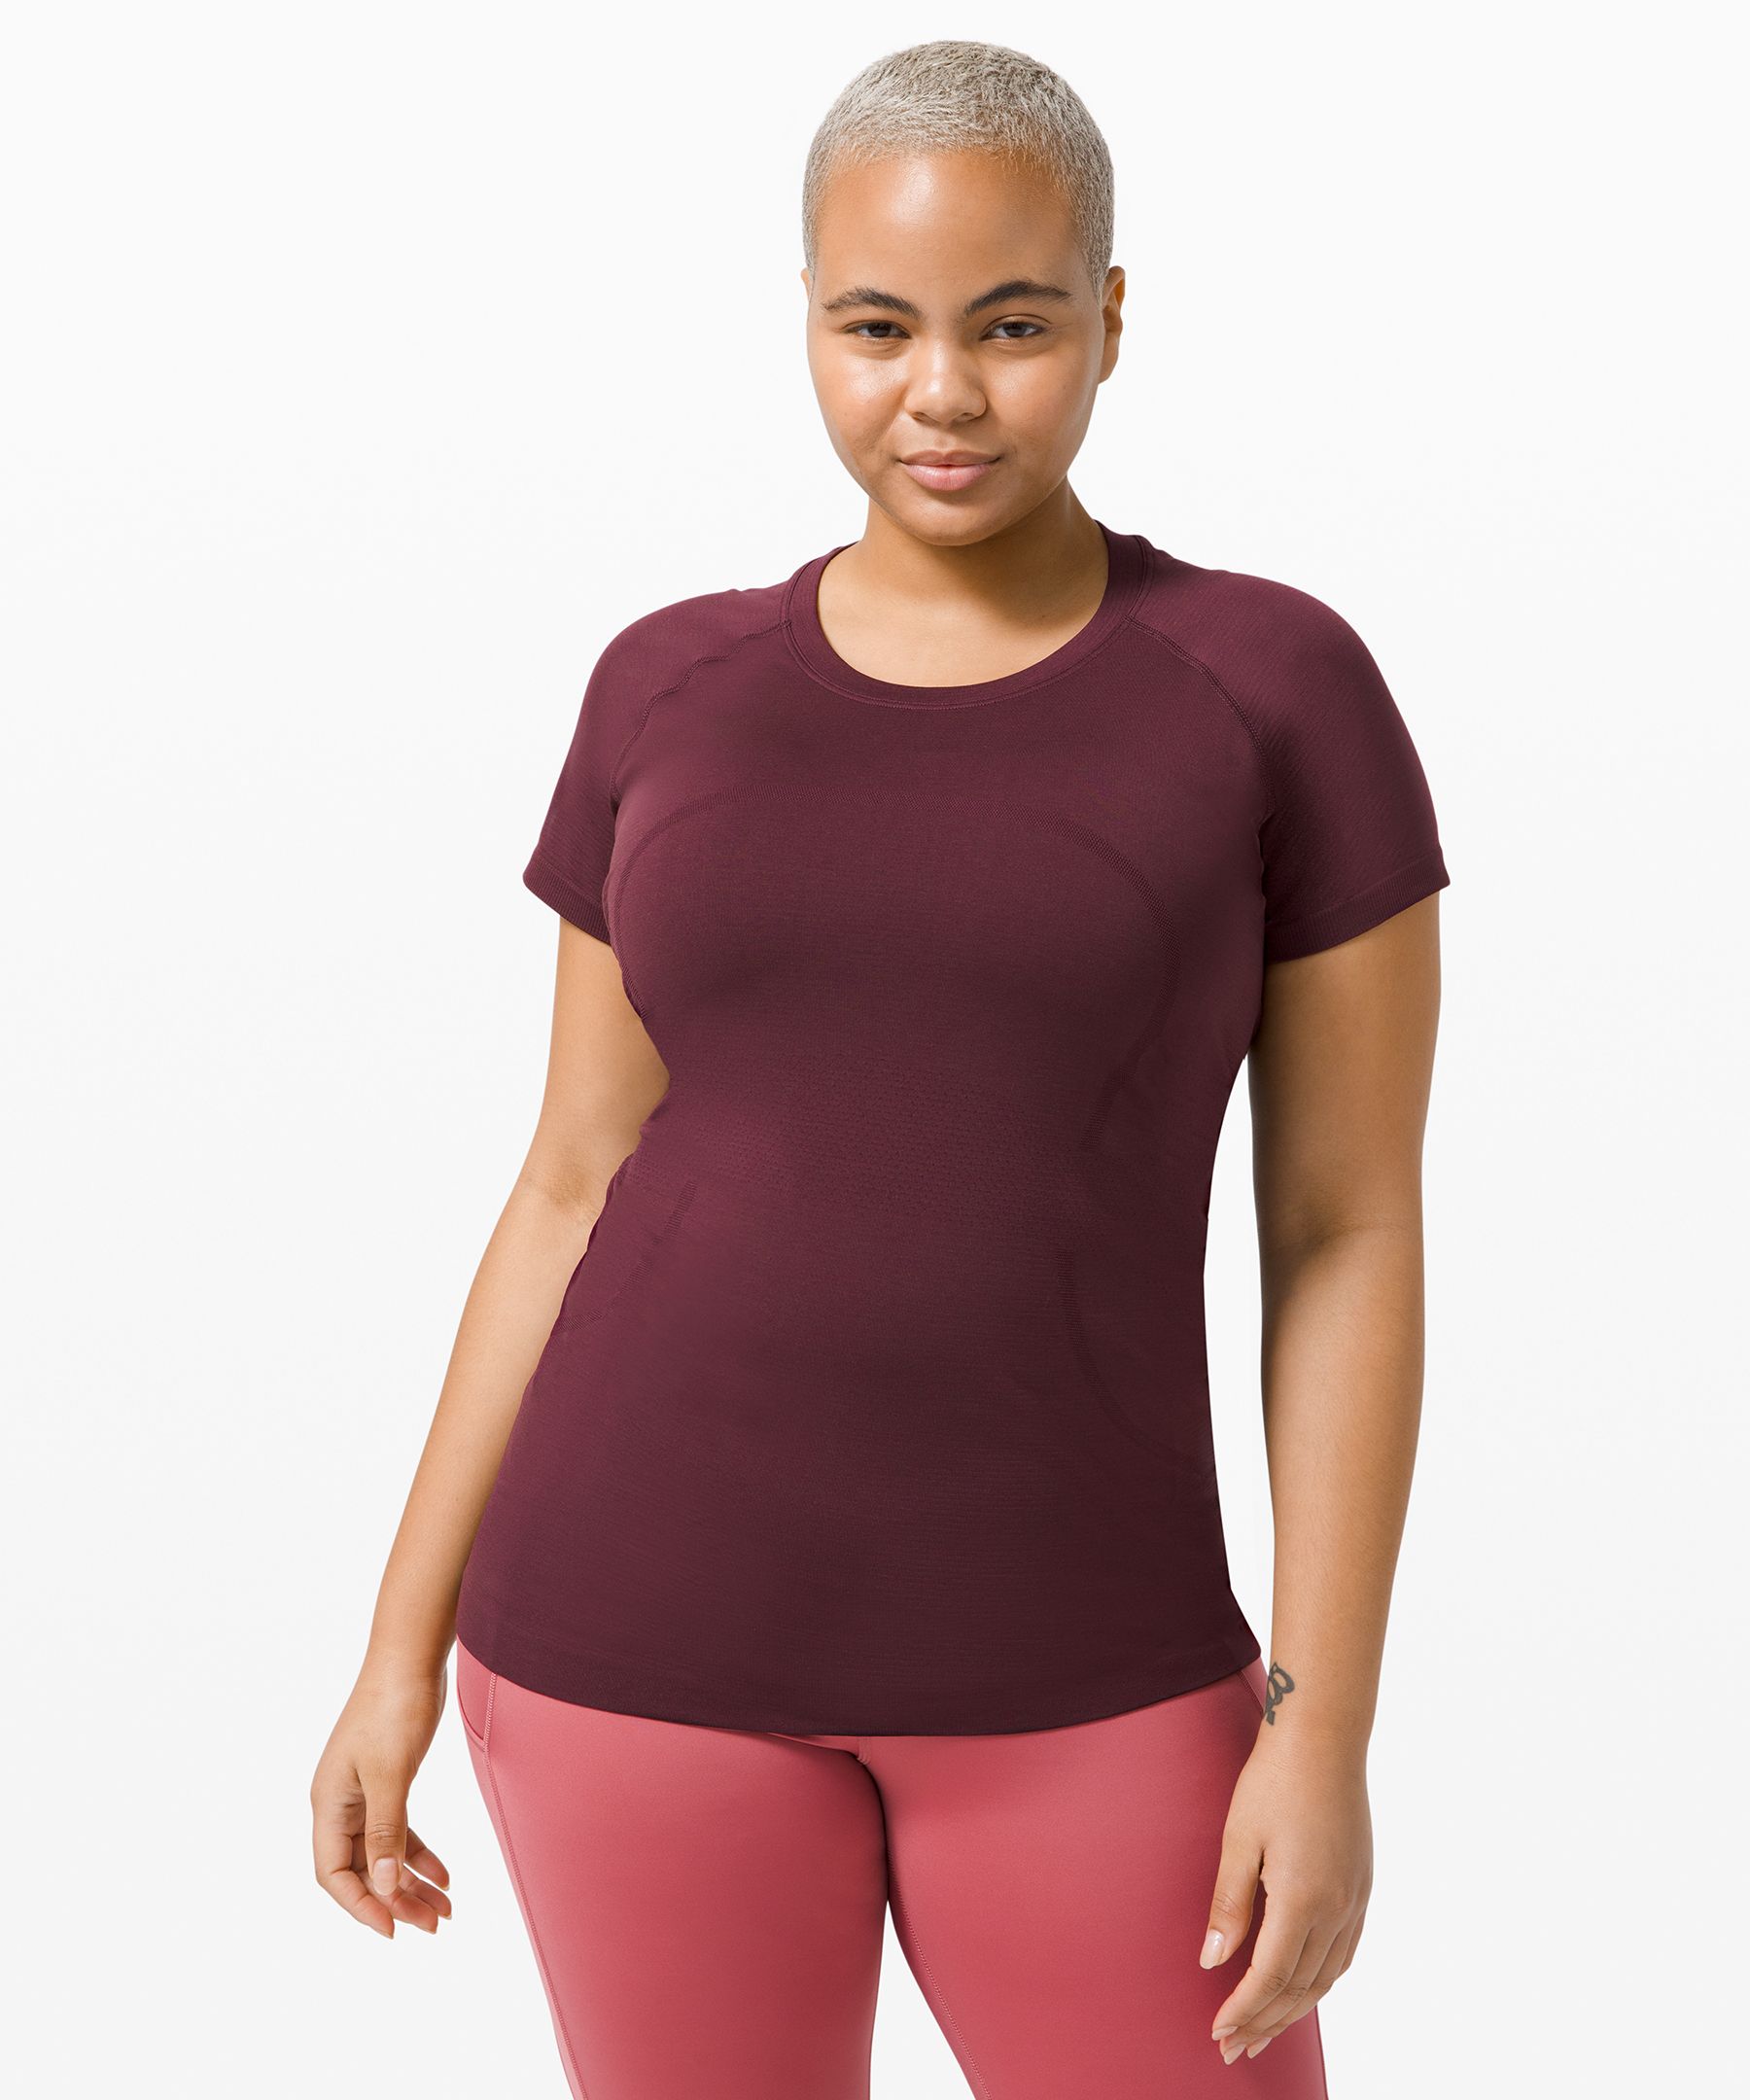 Lululemon Swiftly Tech Short Sleeve Shirt 2.0 In Cassis/cassis